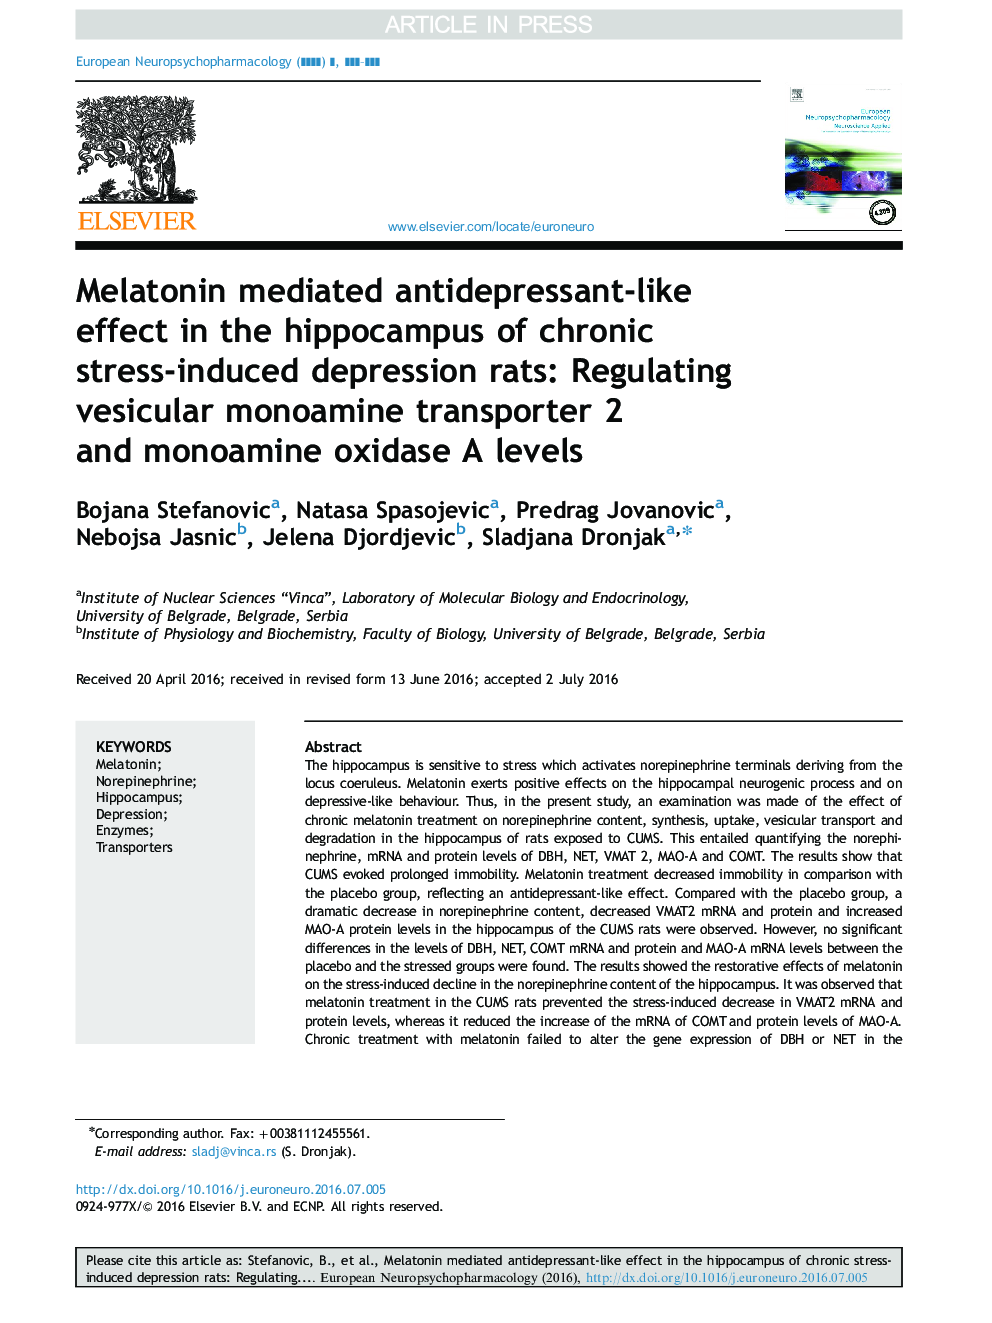 Melatonin mediated antidepressant-like effect in the hippocampus of chronic stress-induced depression rats: Regulating vesicular monoamine transporter 2 and monoamine oxidase A levels